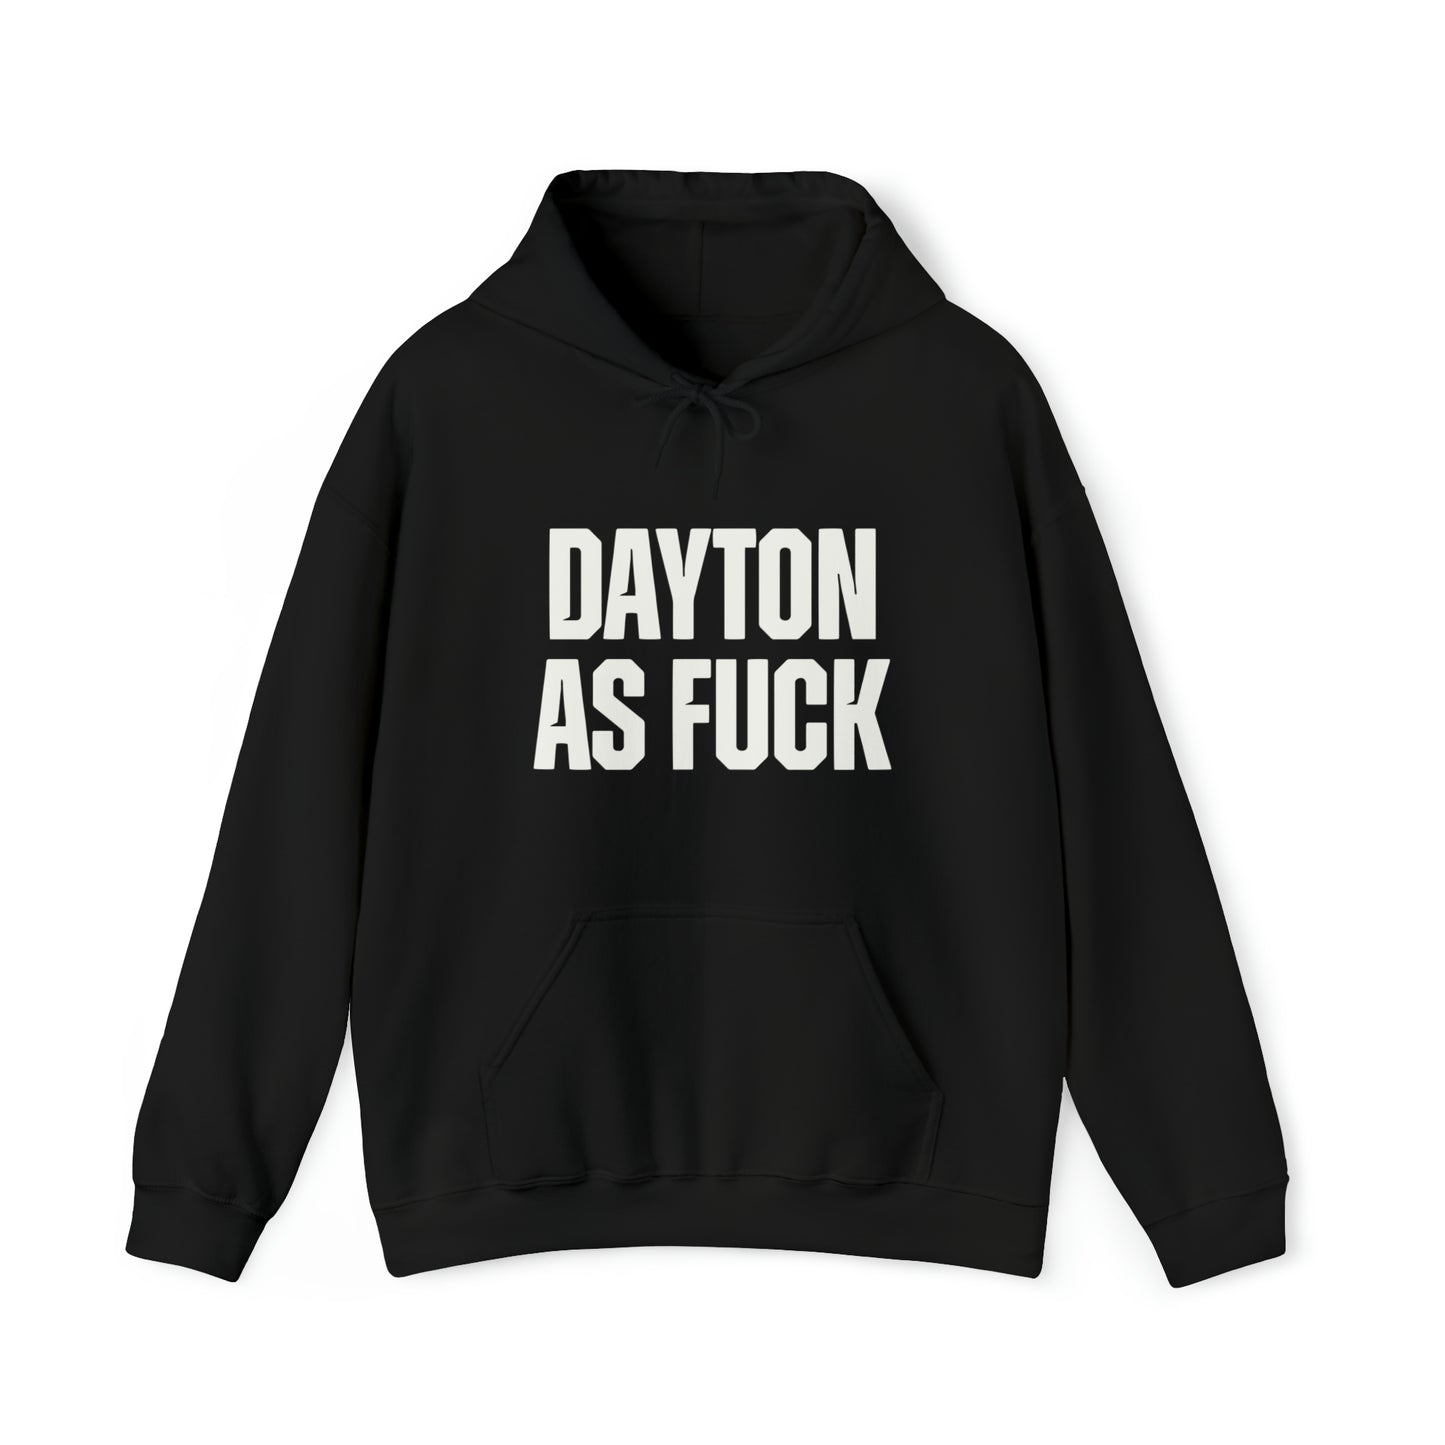 Dayton As Fuck Hoodie Sweatshirt